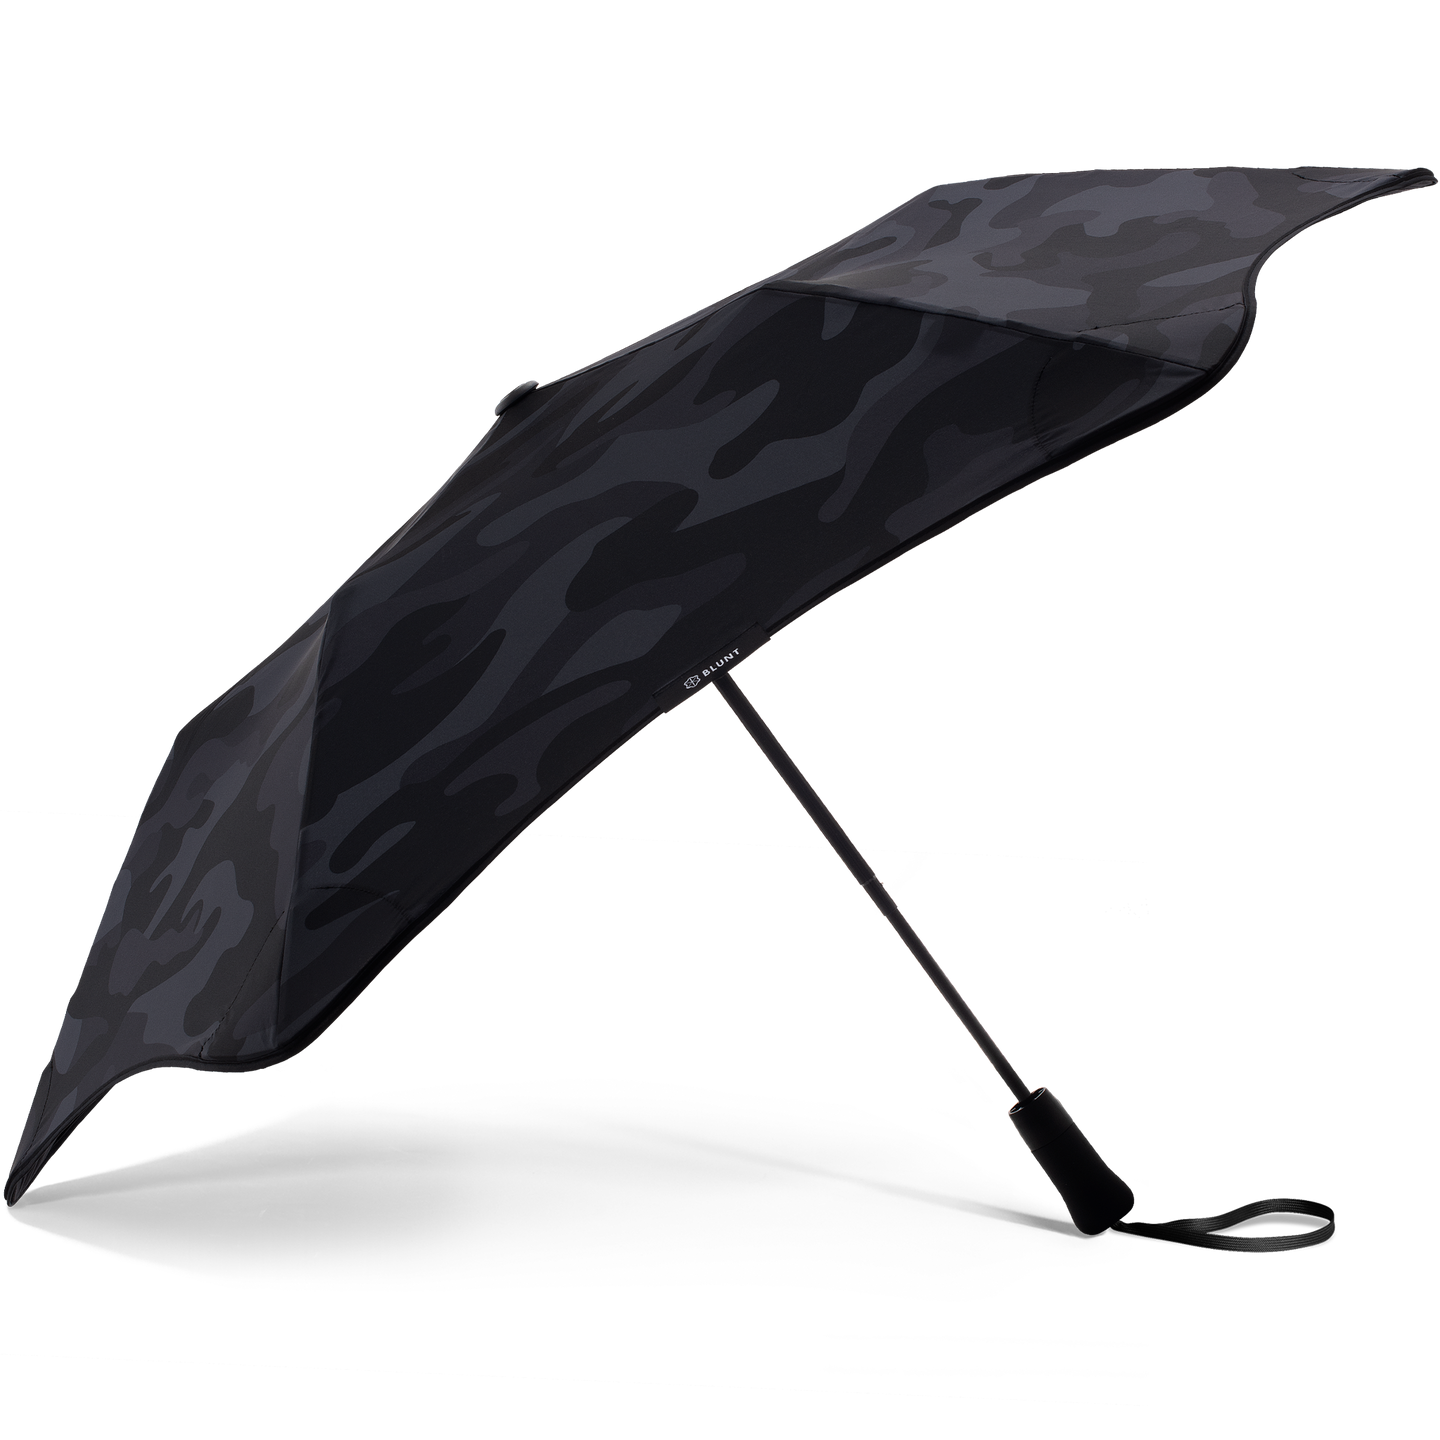 2020 Metro Camo Stealth Blunt Umbrella Side View